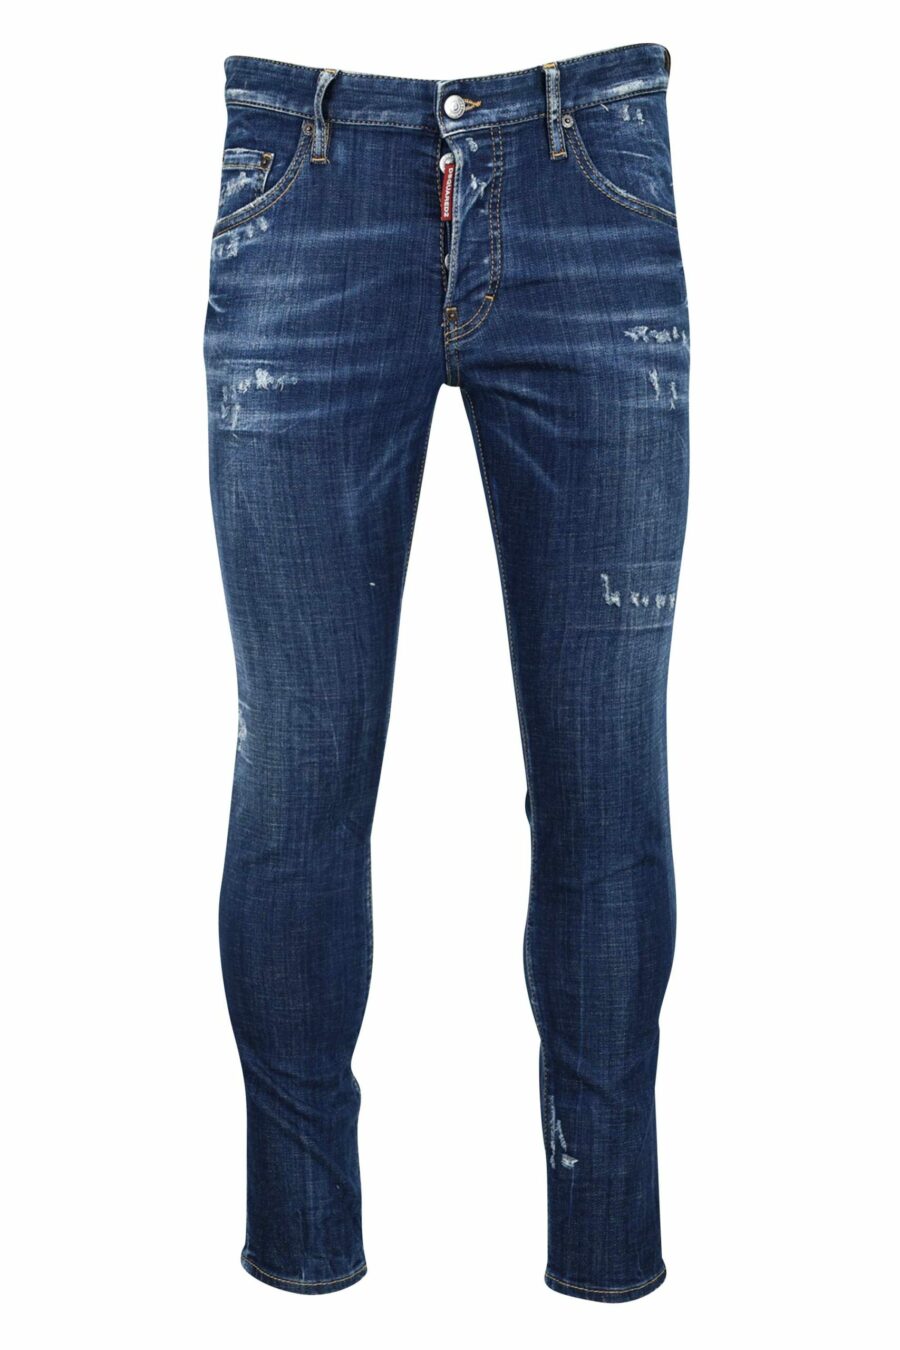 Semi-worn blue "skater jean" jeans - 8054148101503 scaled